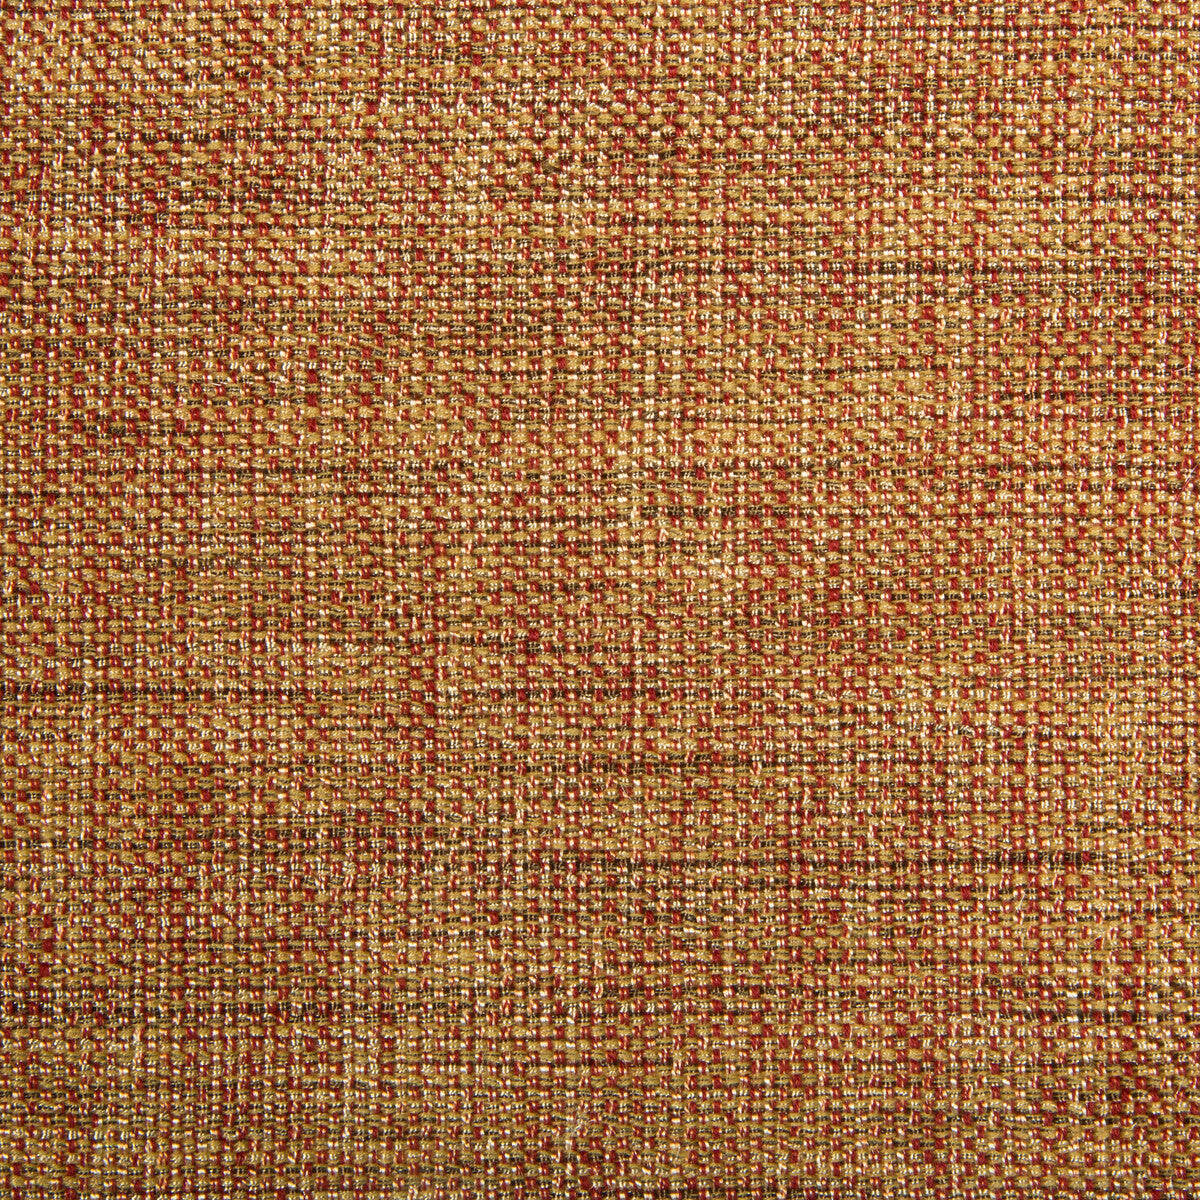 Kravet Smart fabric in 34939-624 color - pattern 34939.624.0 - by Kravet Smart